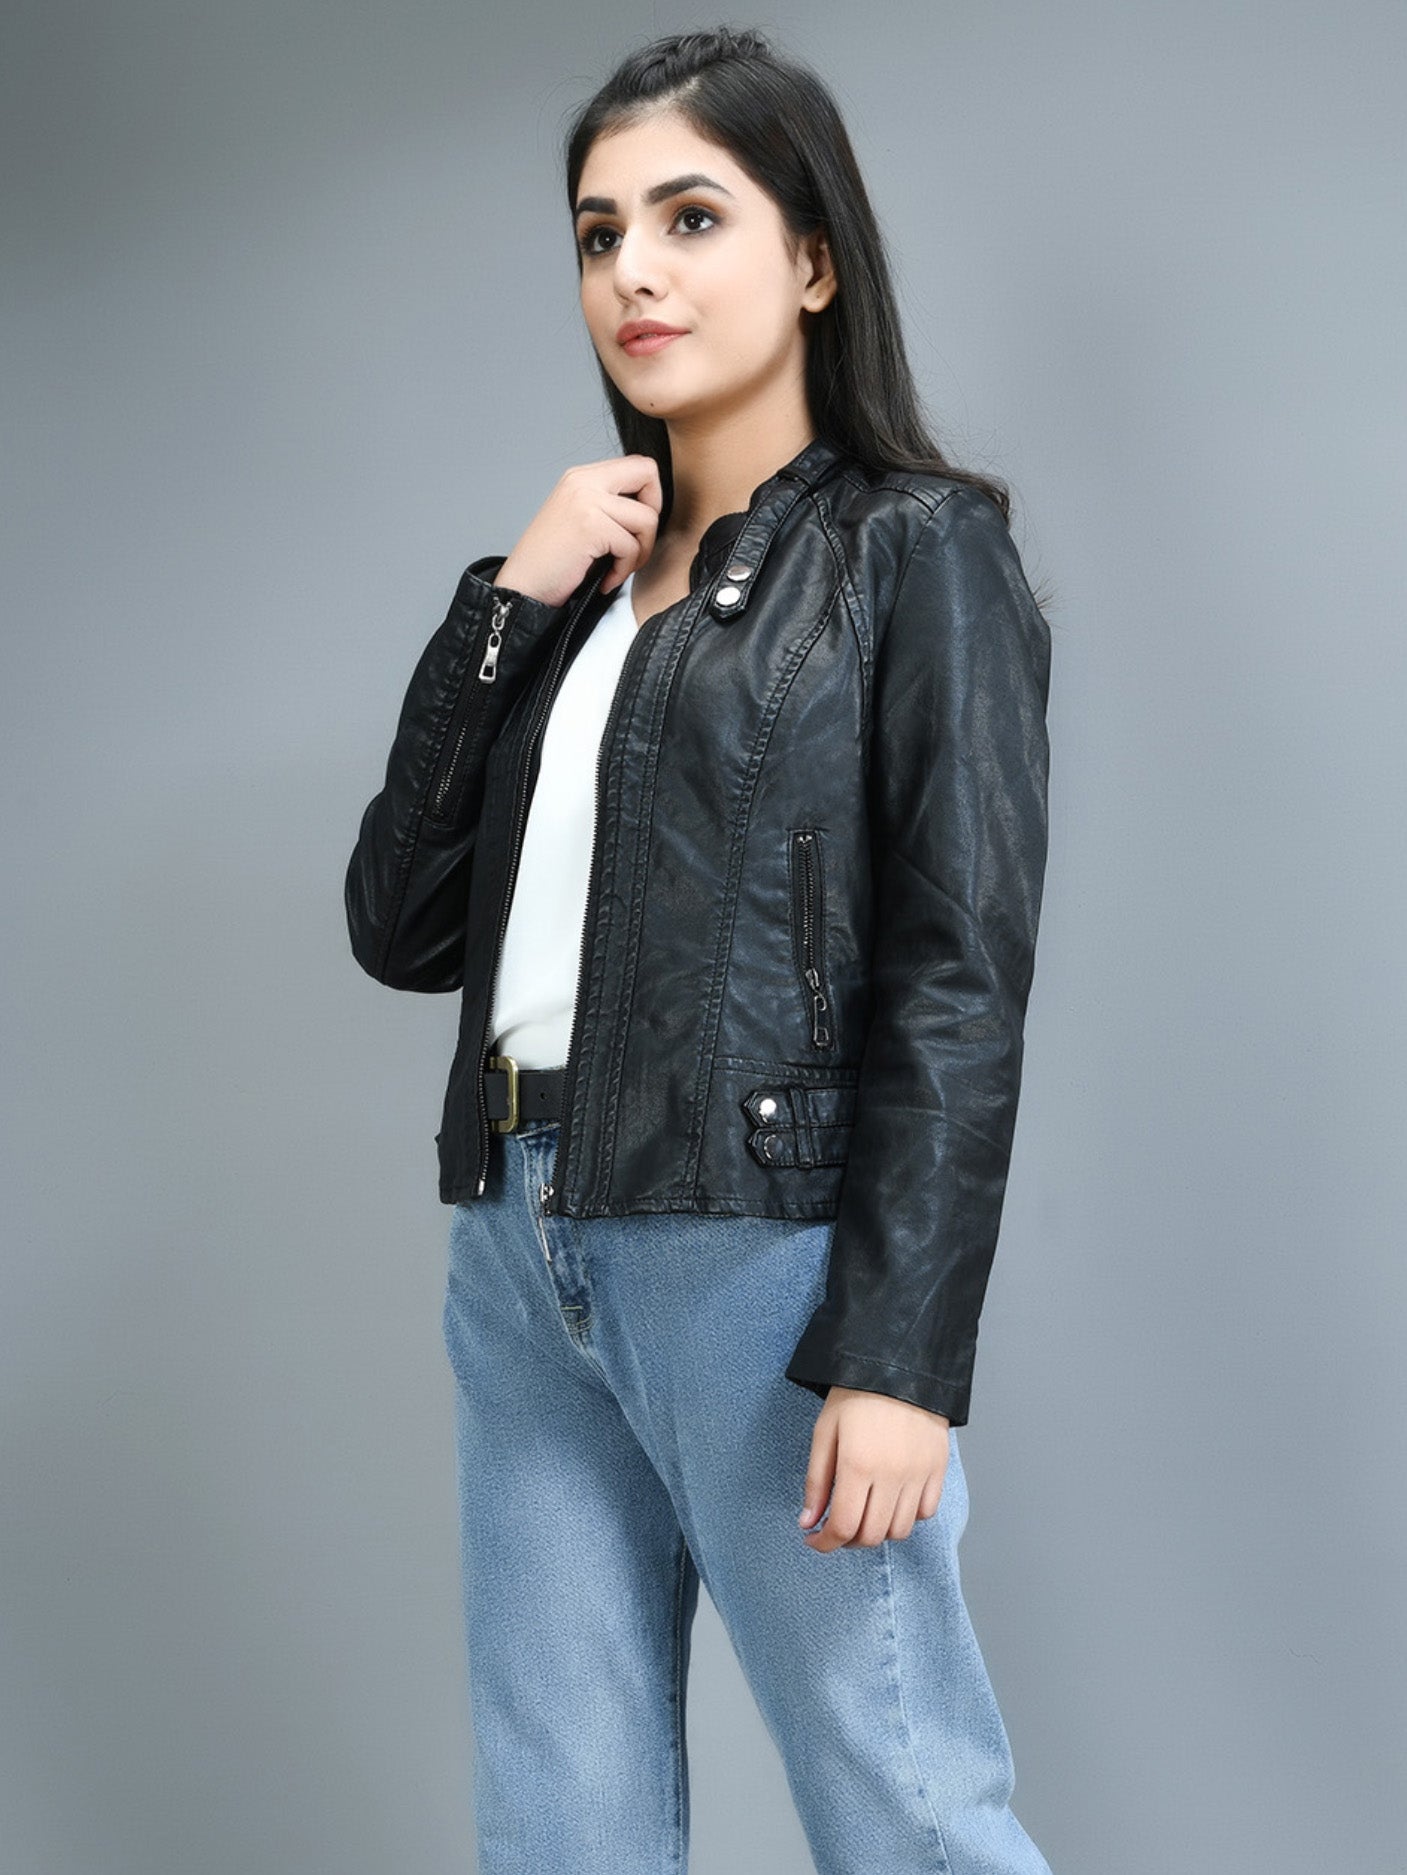 Classic Leather Jacket - Black